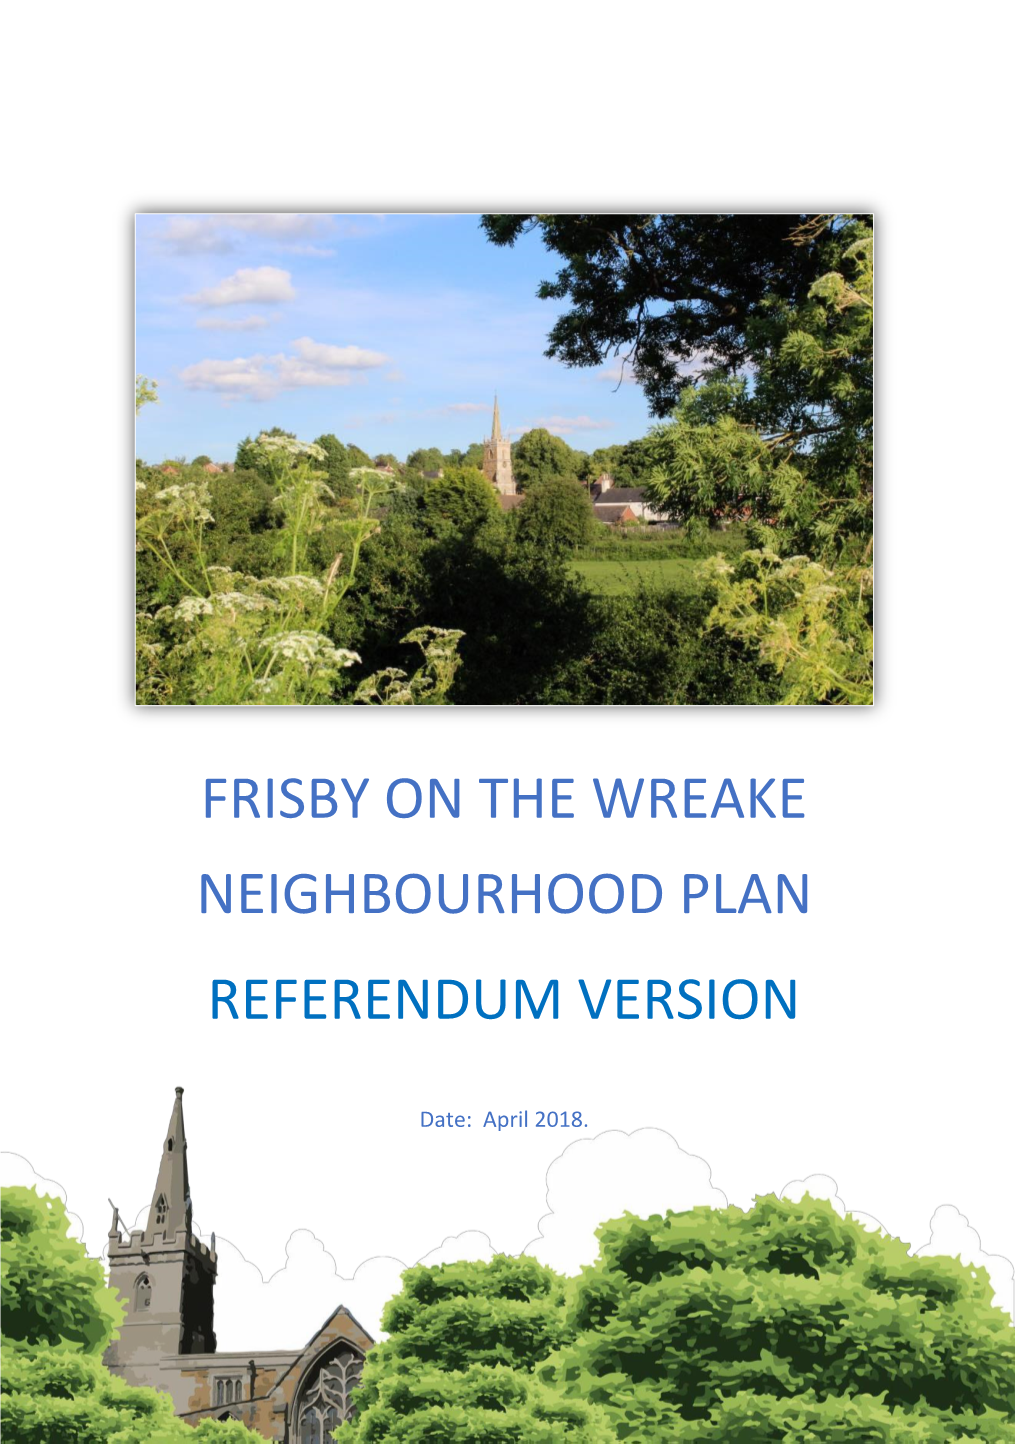 Frisby on the Wreake Neighbourhood Plan Referendum Version